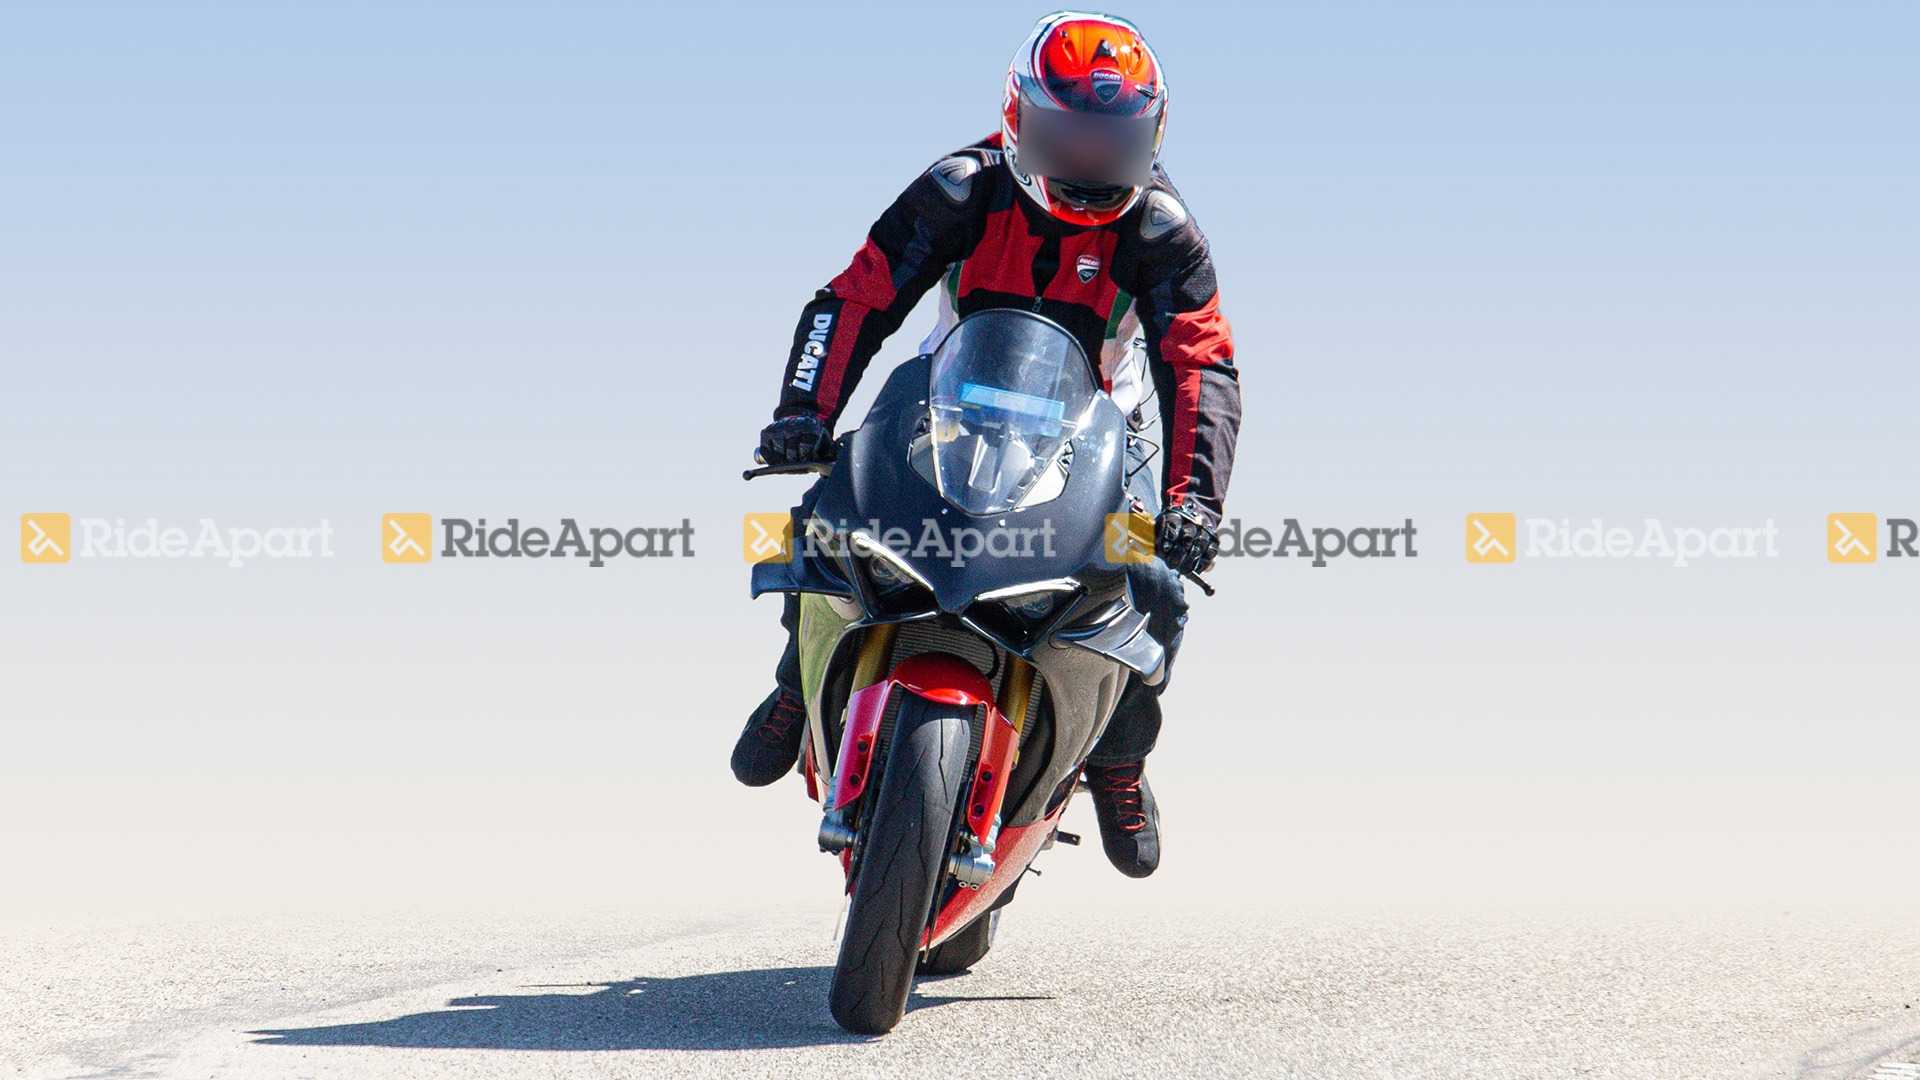 Ducati Panigale V4 Superleggera-test mule-uae-dubai